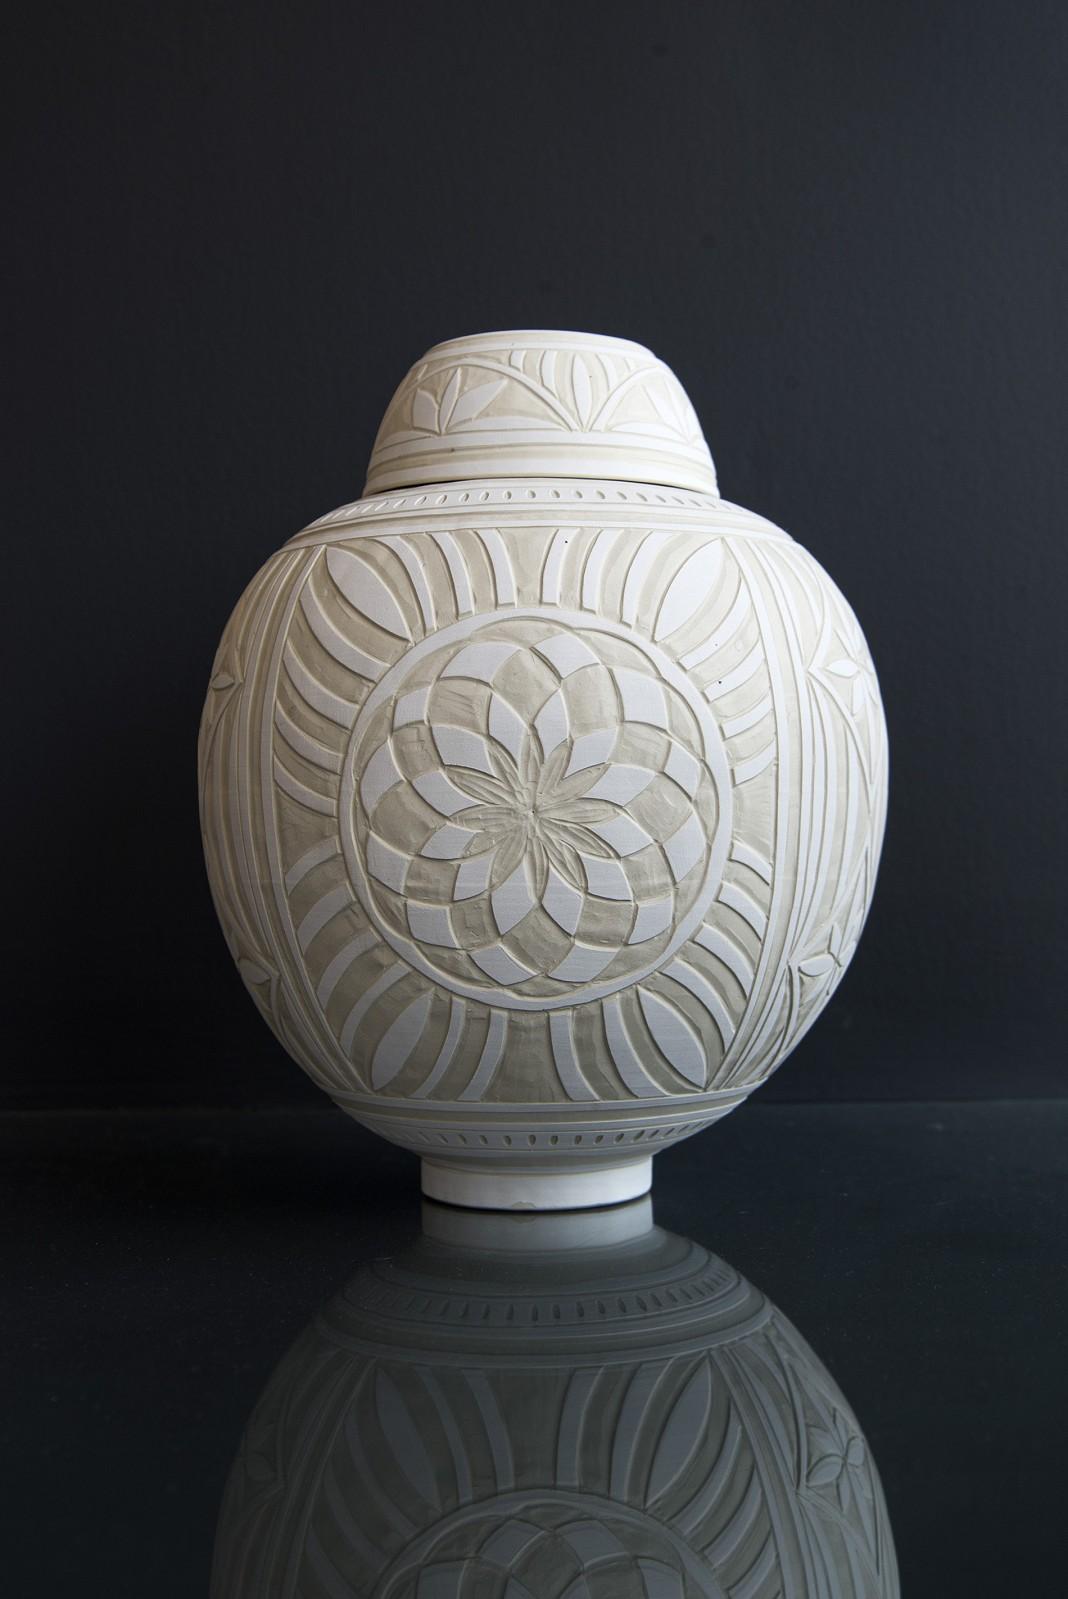 Medium Engraved Ginger Jar - decorative, detailed, handcrafted, porcelain vessel - Black Abstract Sculpture by Loren Kaplan